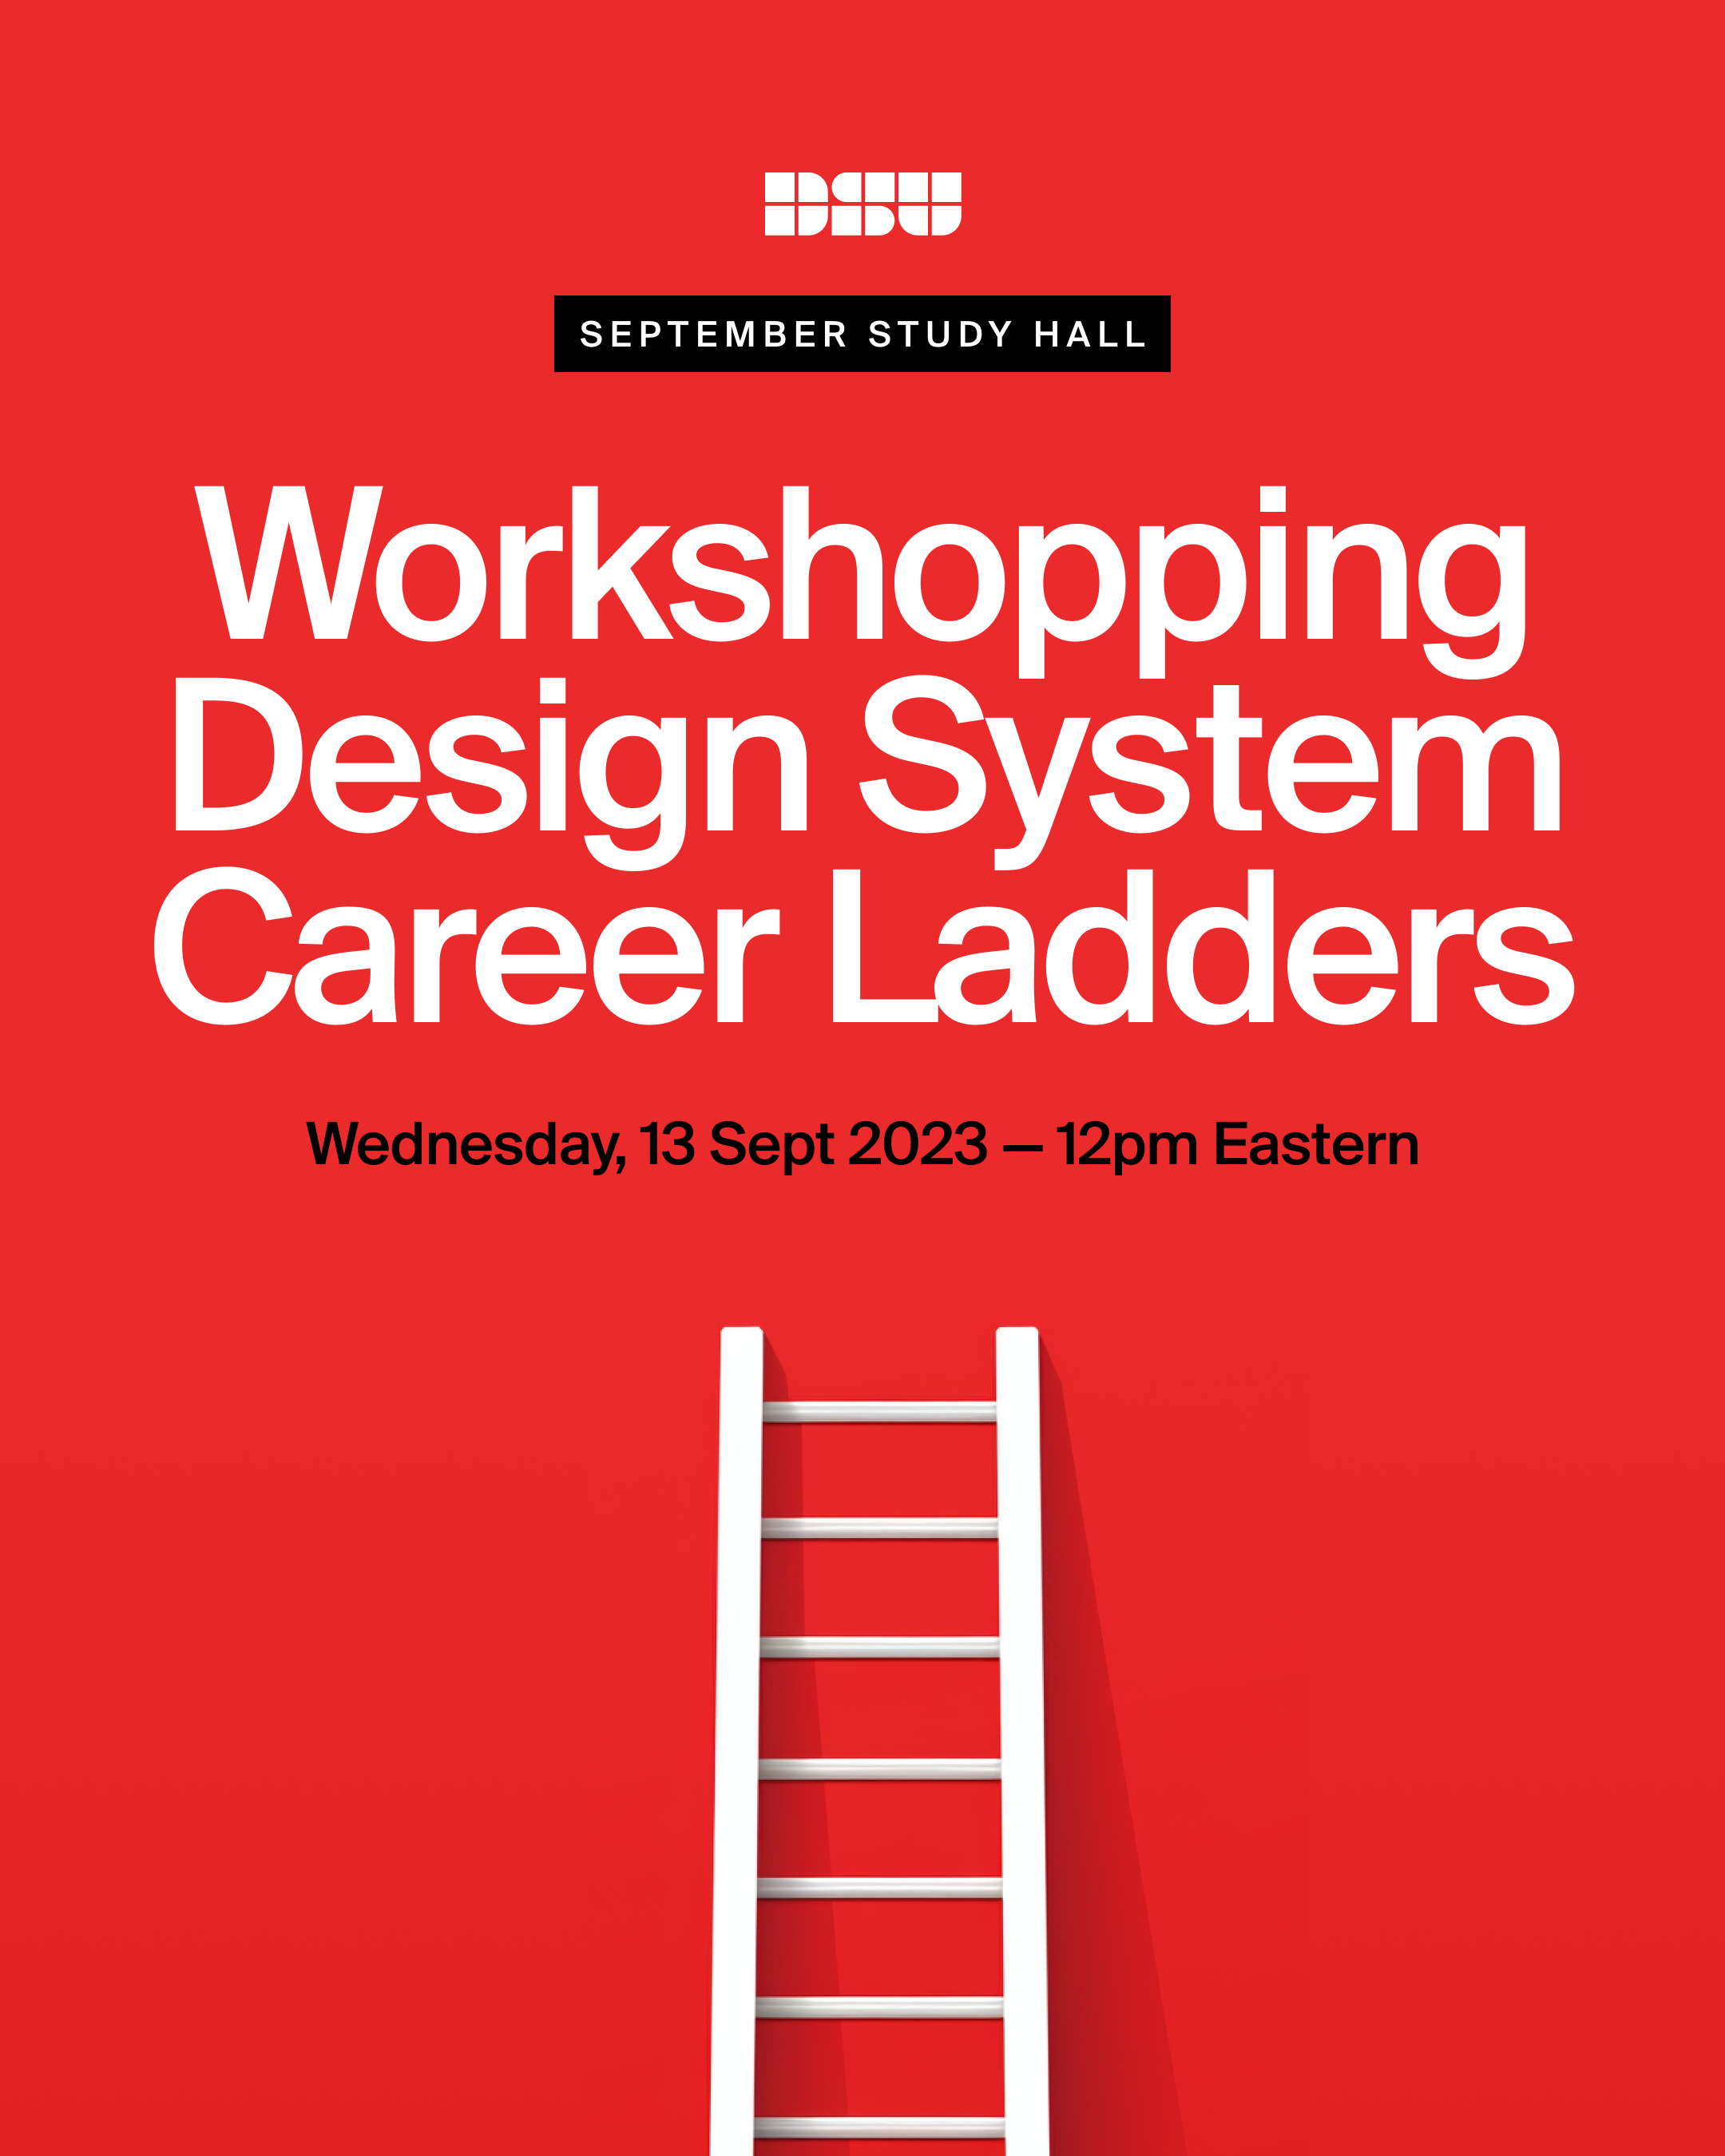 Instagram post for “Workshopping Design System Career Ladders” event